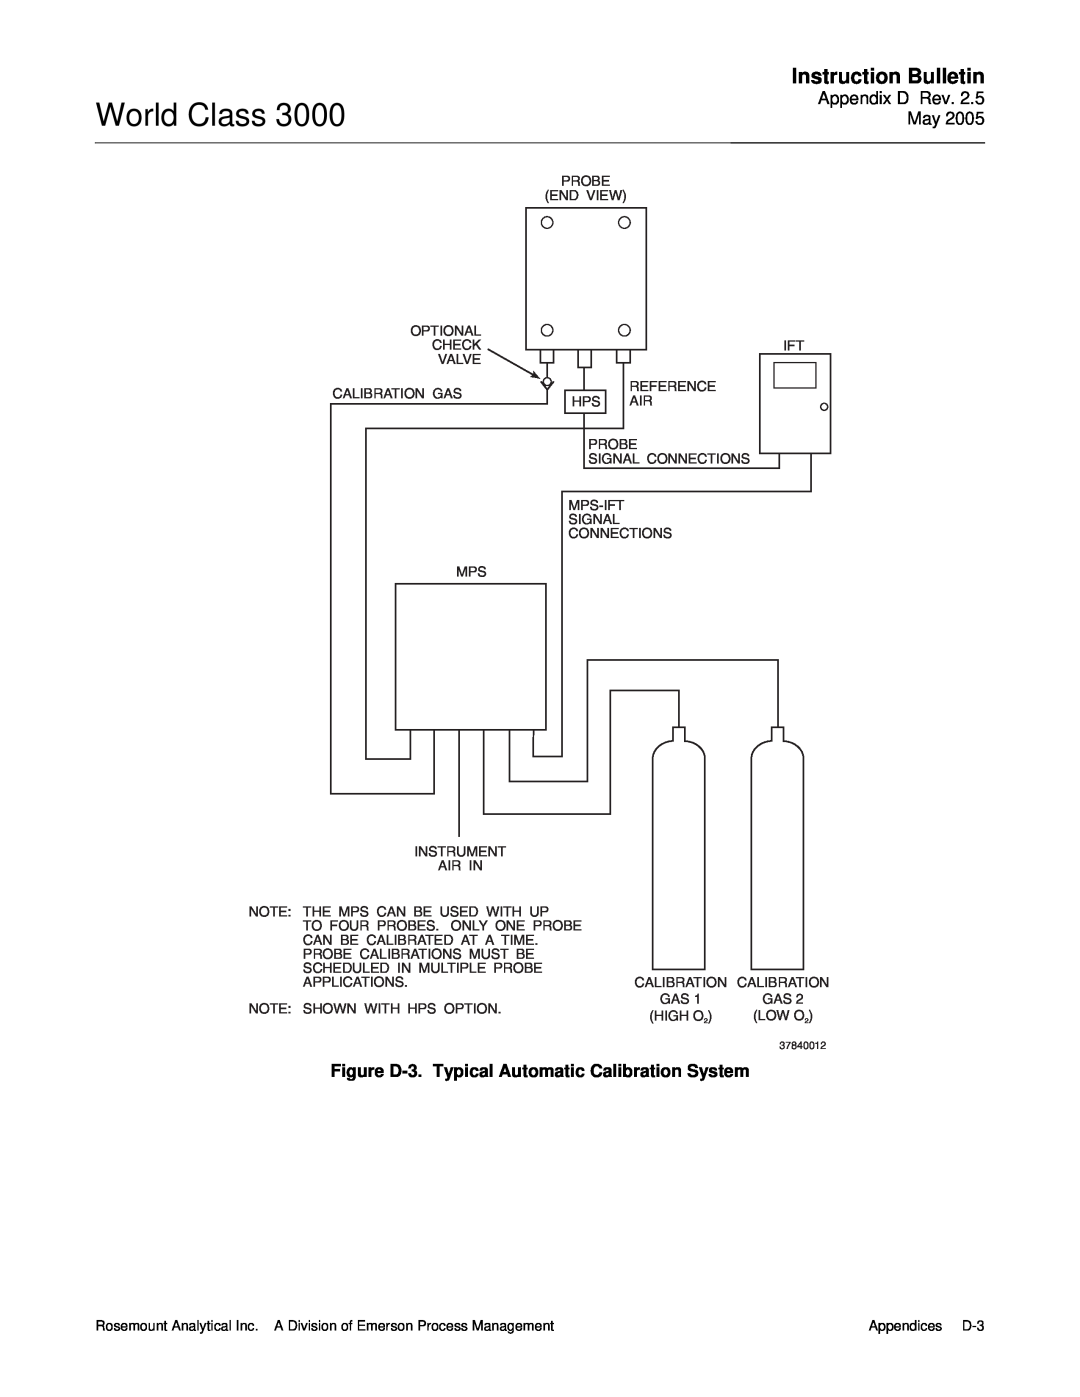 Emerson 3000 World Class, Instruction Bulletin, Figure D-3.Typical Automatic Calibration System, Appendices D-3 